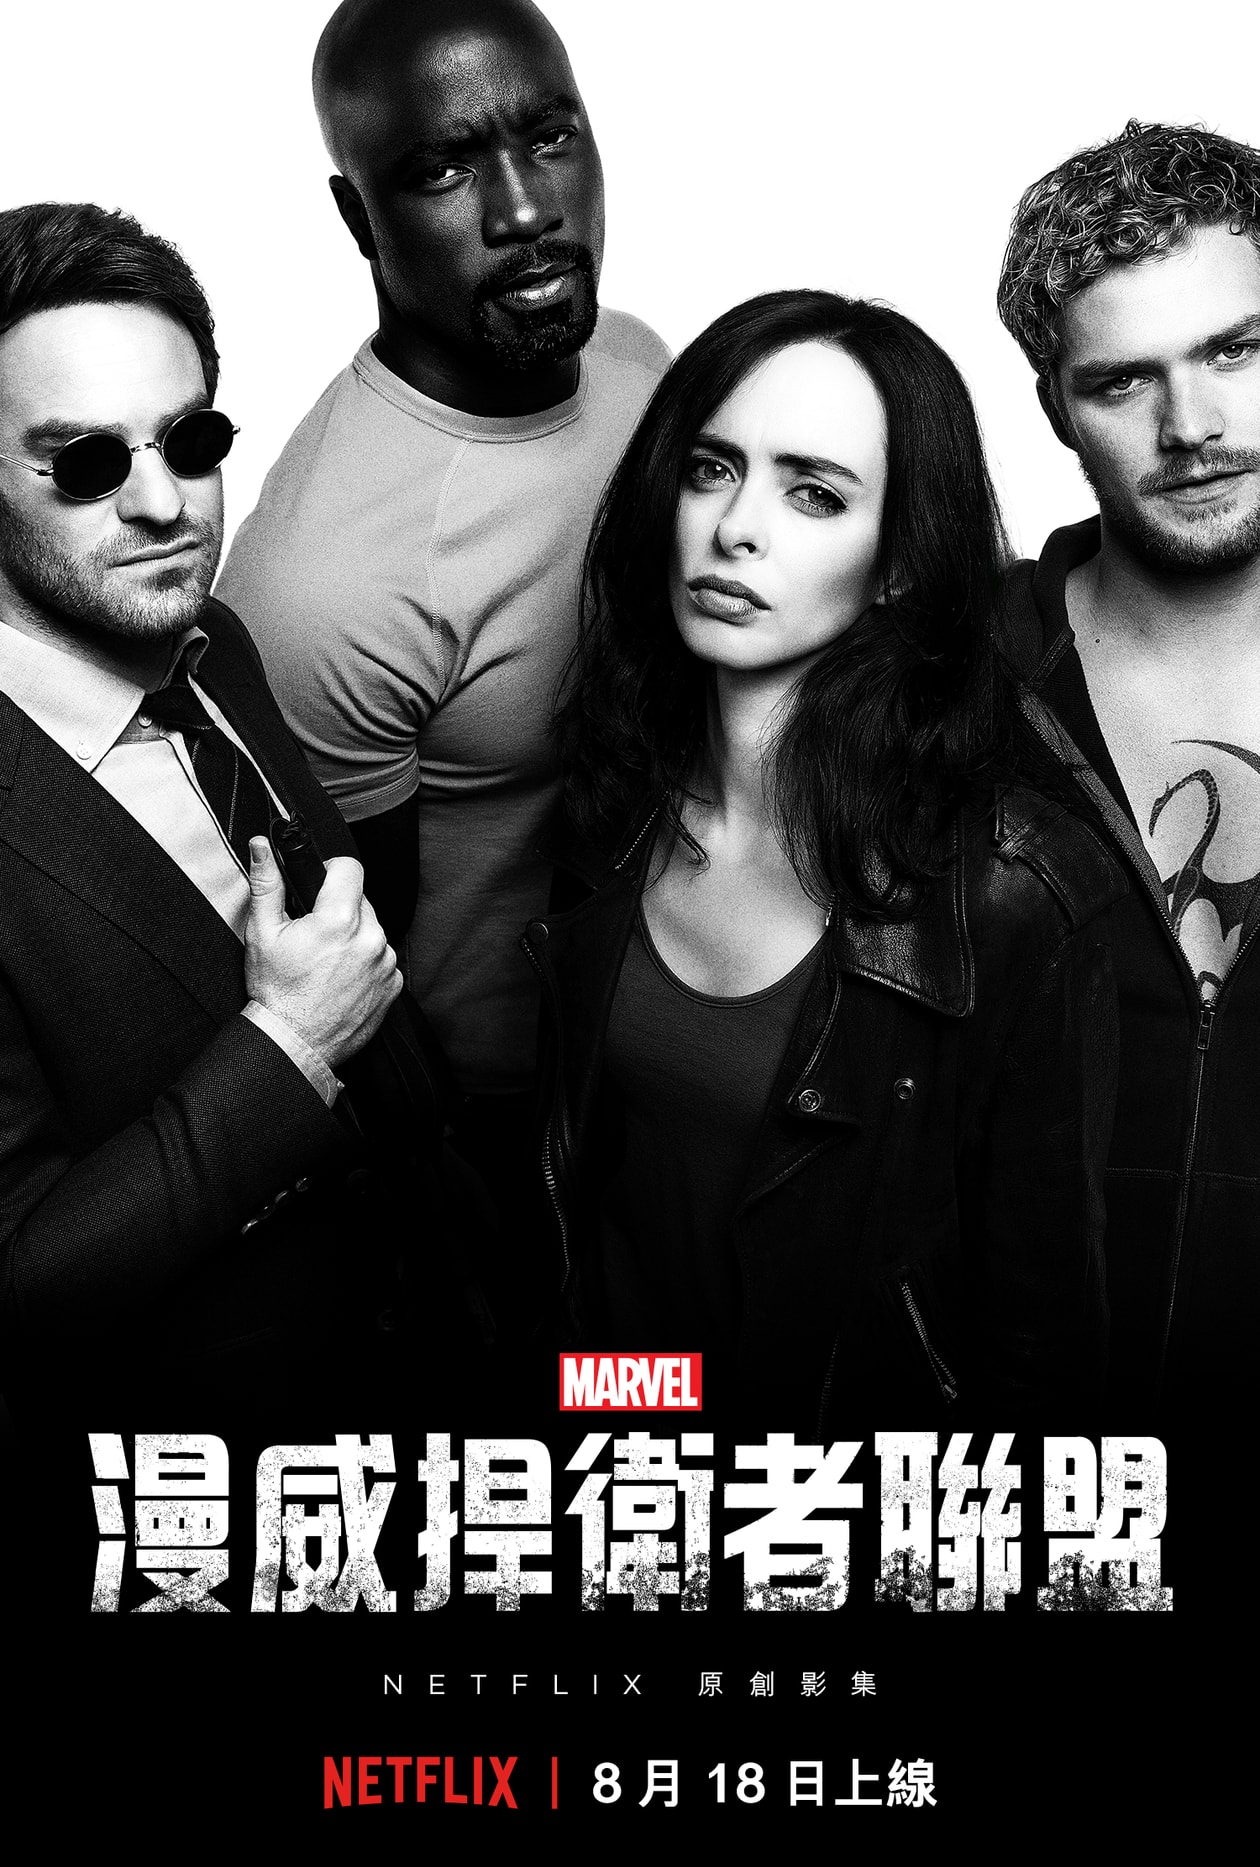 Netflix《Marvel's The Defenders》全新劇集海報搶先曝光